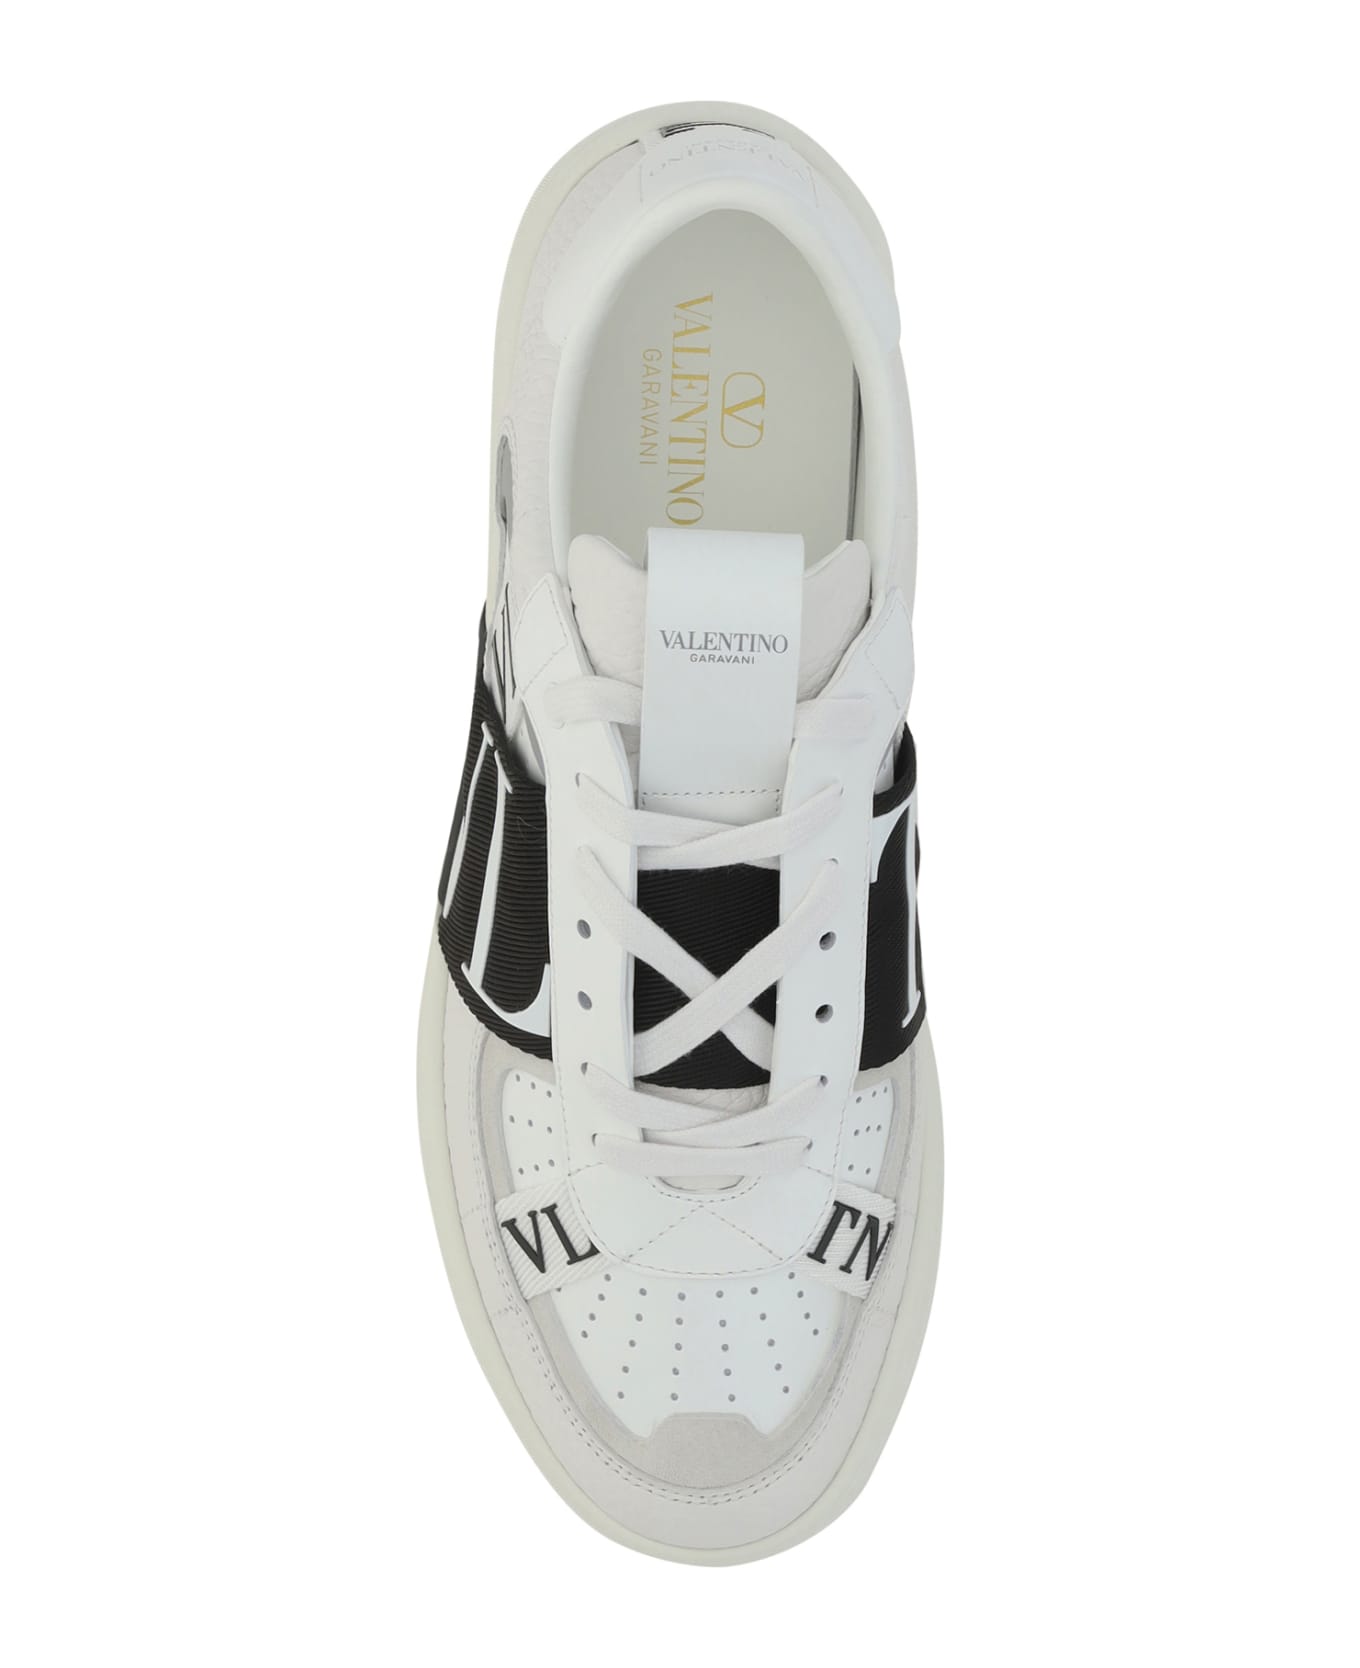 Valentino Garavani Vl7n Sneakers - White